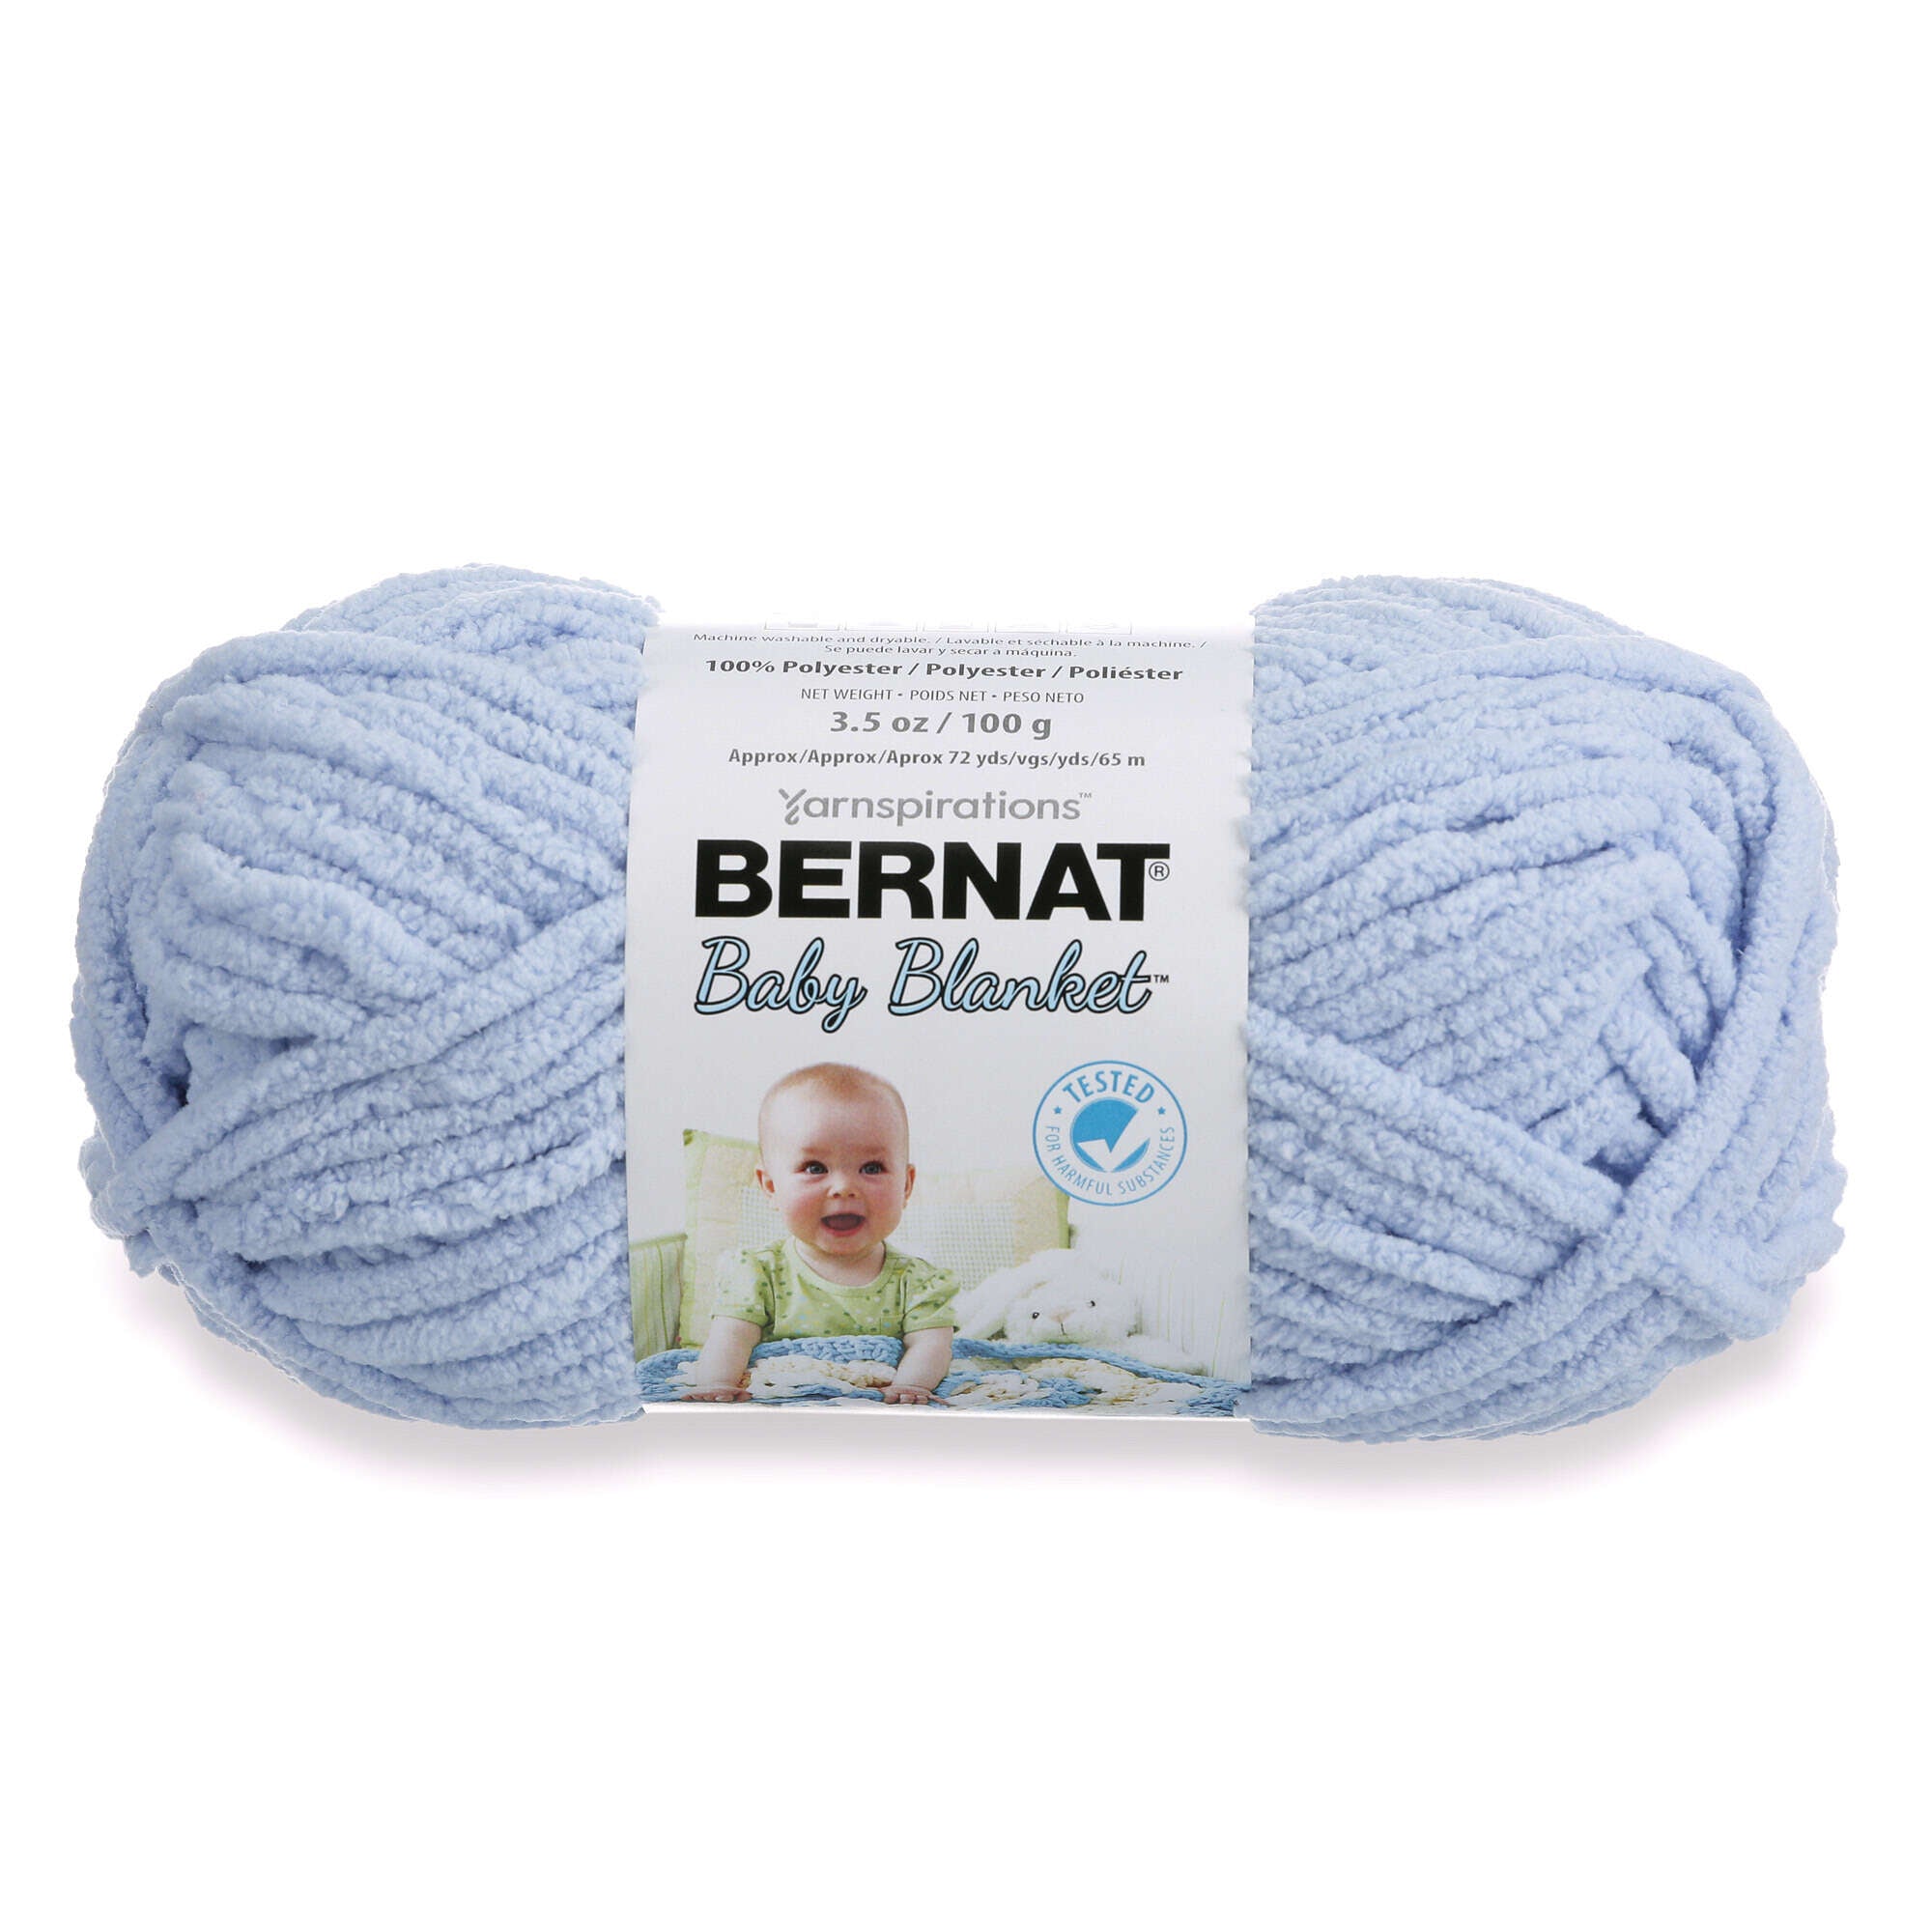 Bernat Super Bulky 100% Polyester Little Denim Yarn, 72 yd, Size: 100 g/3.5 oz, White